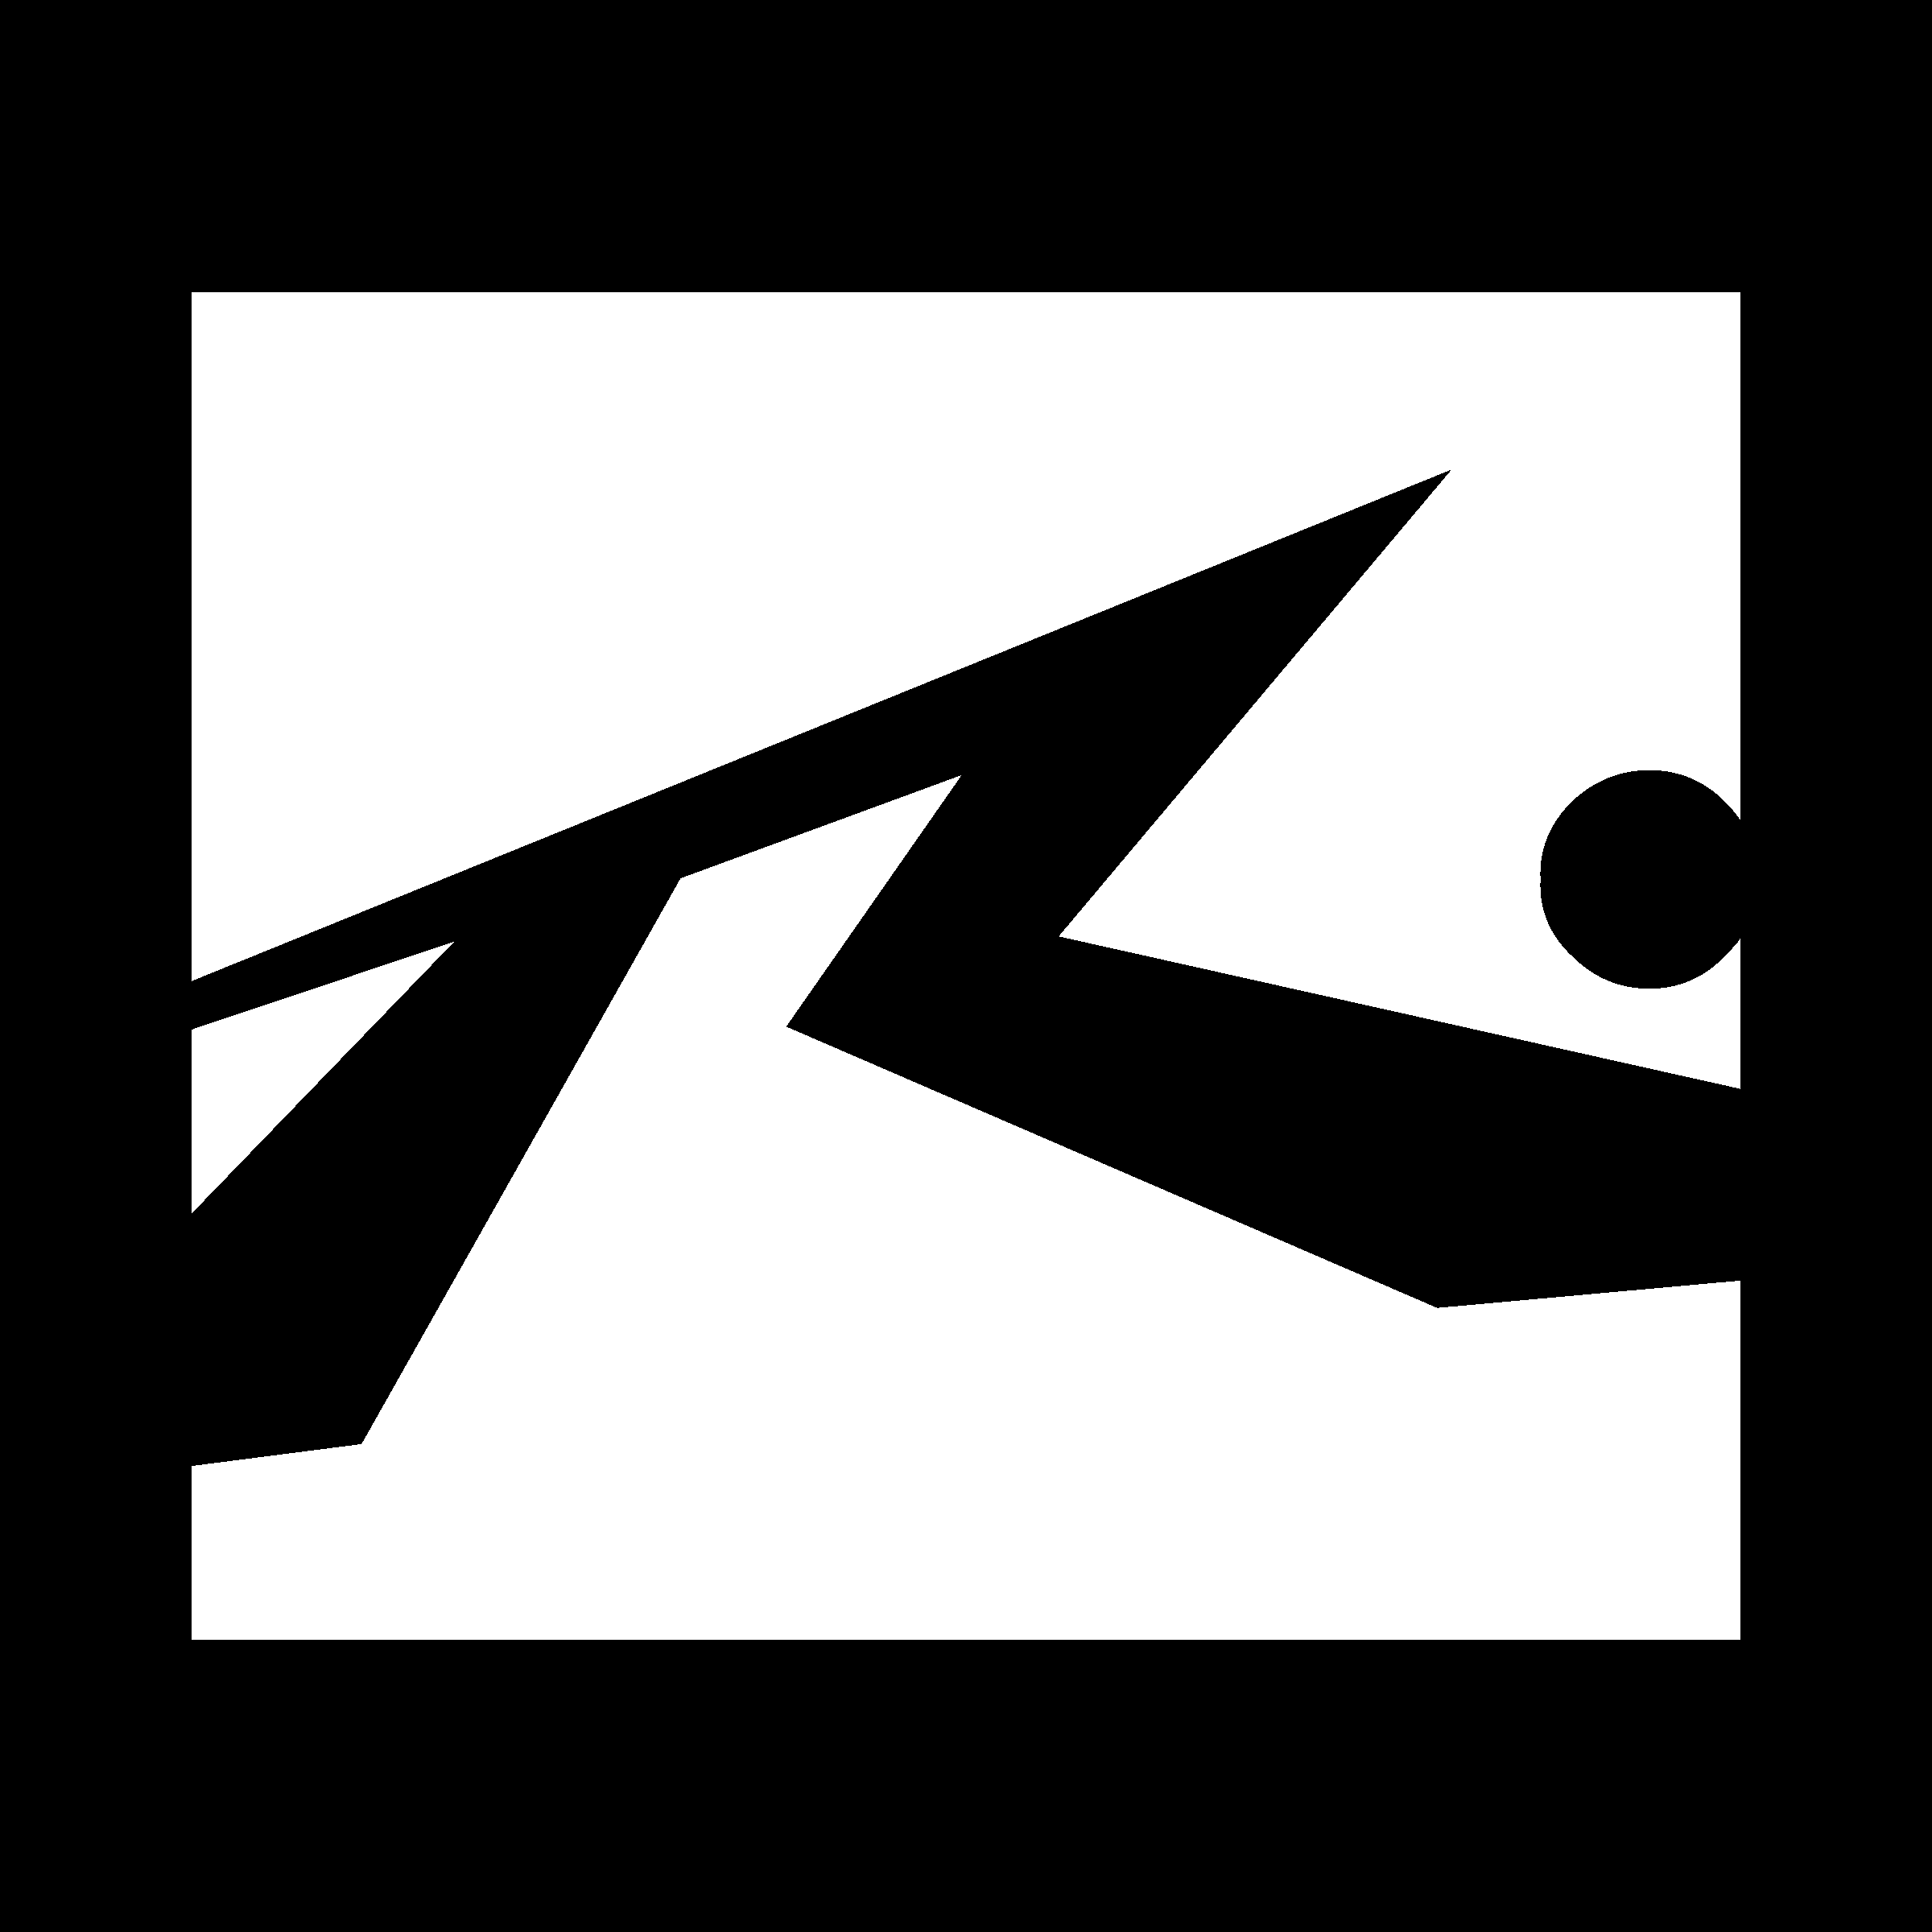 Rusty Logo - Rusty Logo PNG Transparent & SVG Vector - Freebie Supply